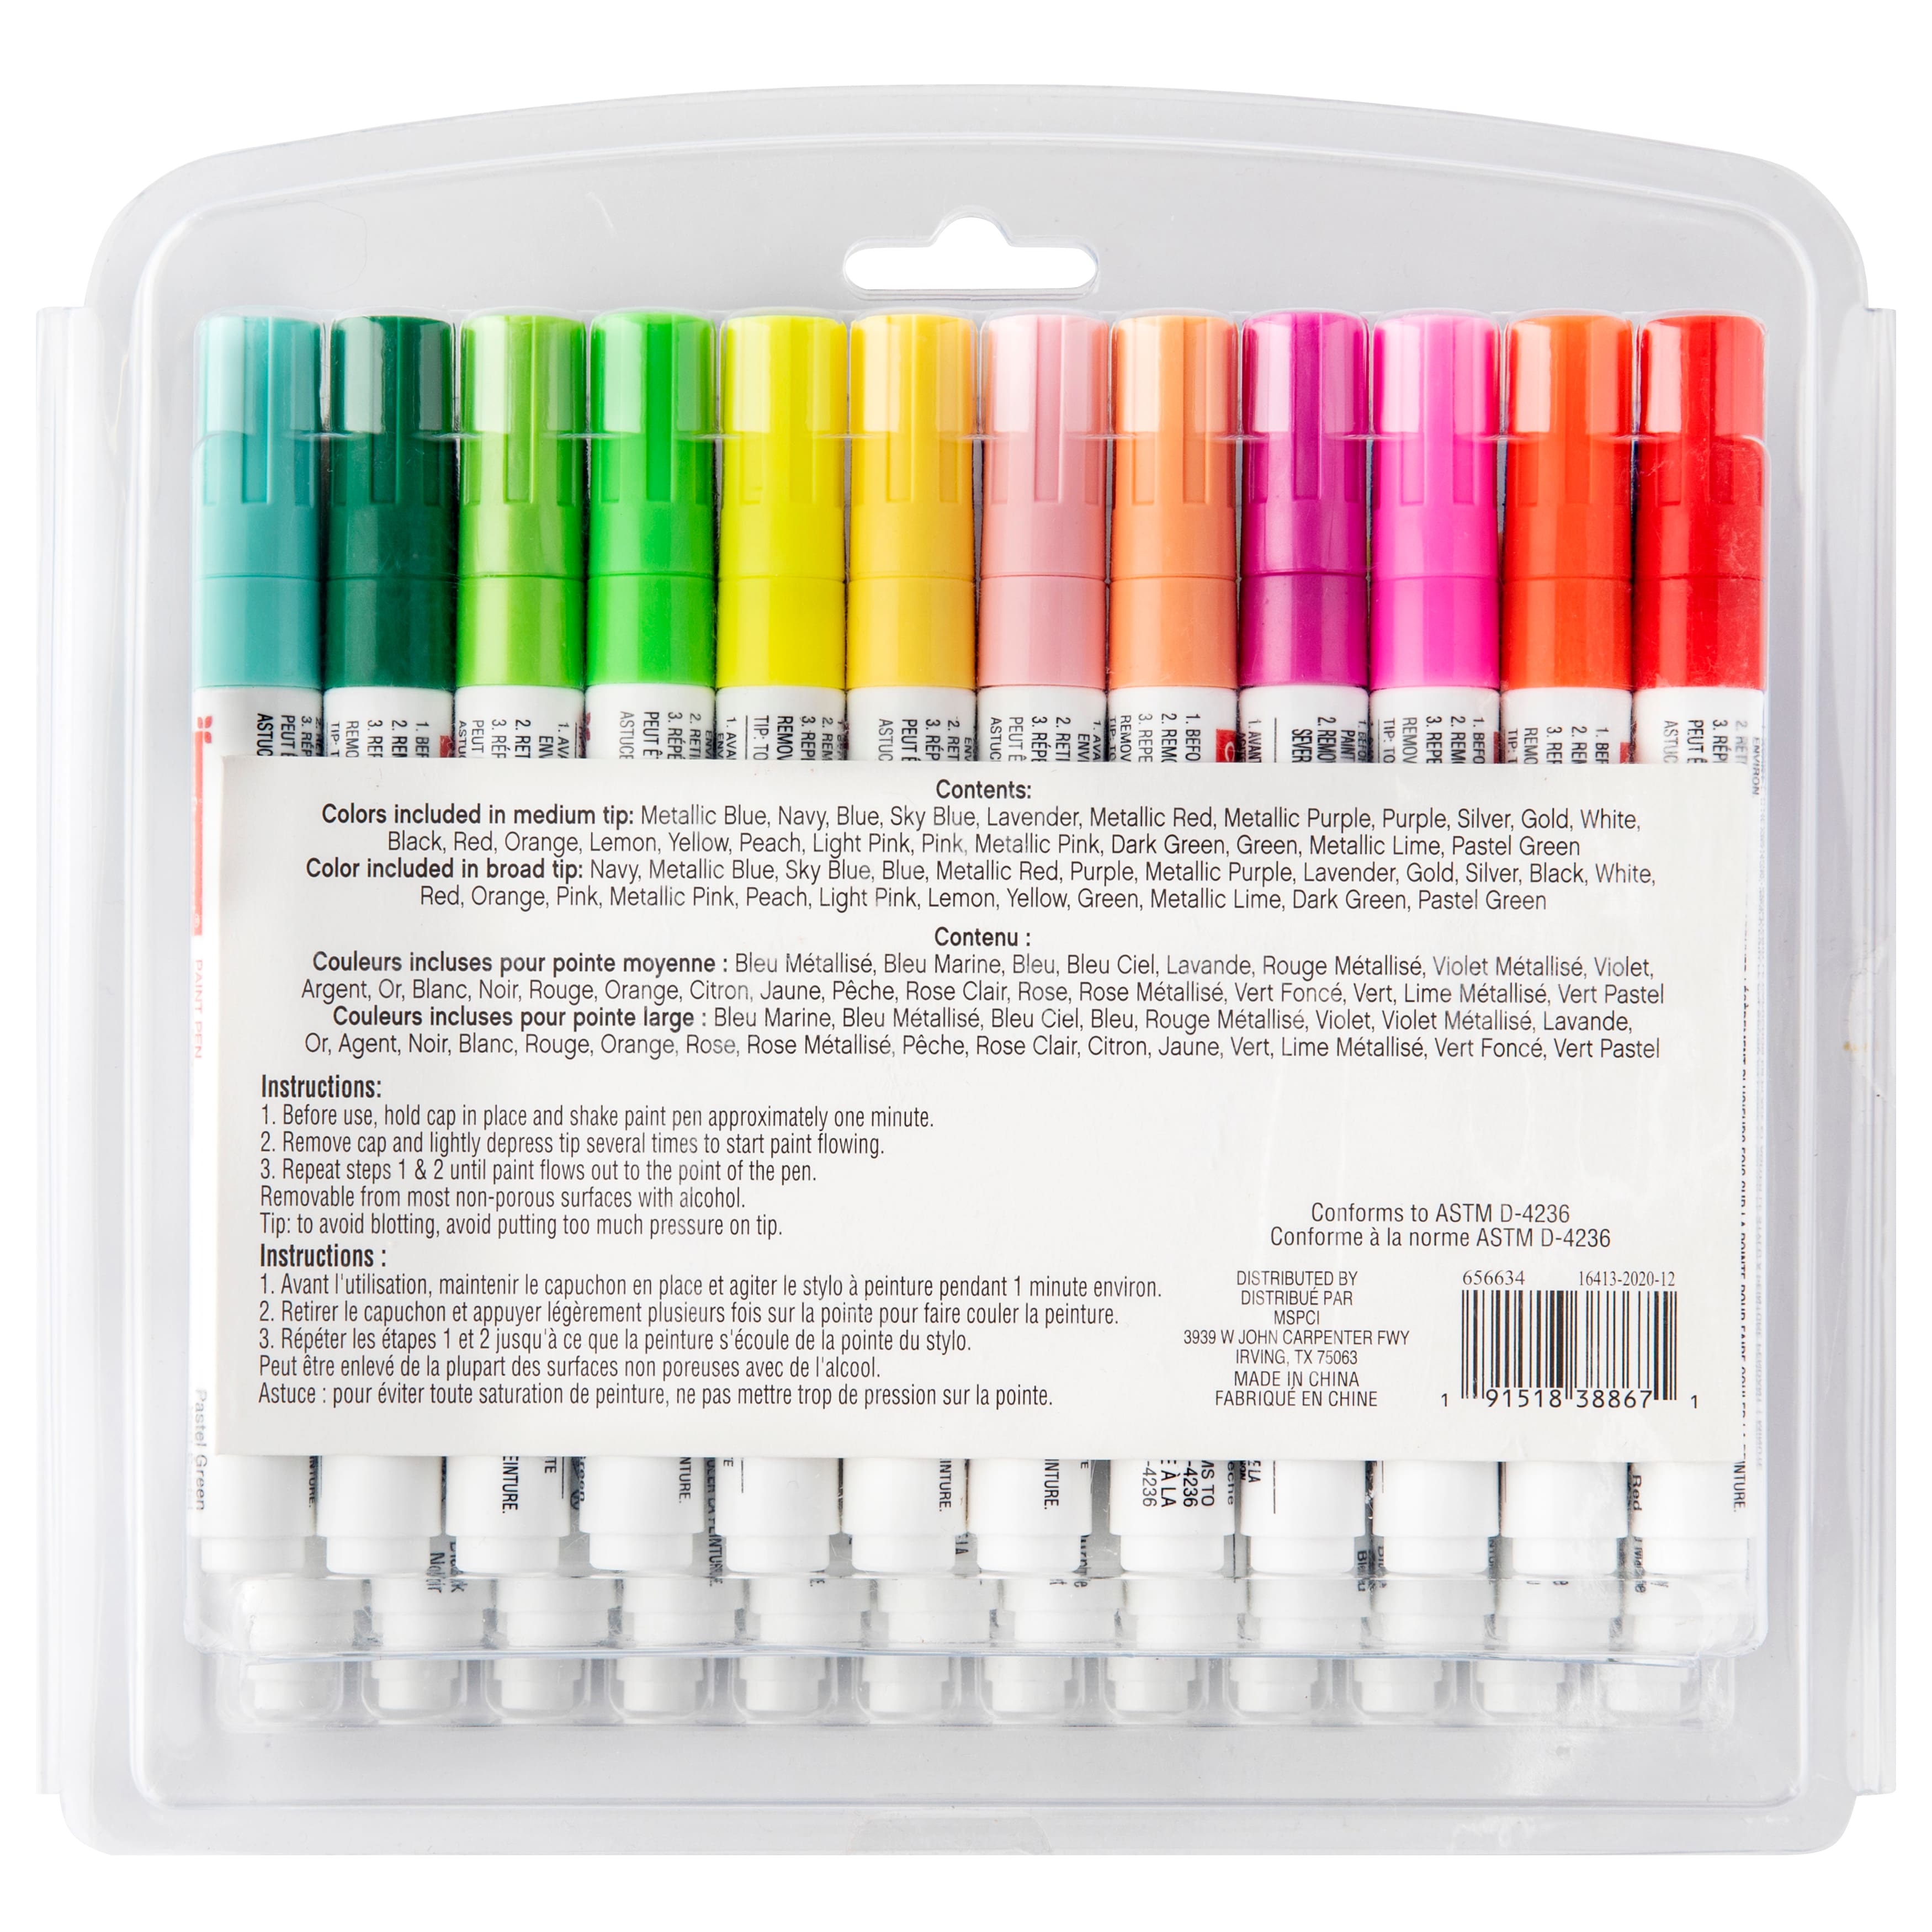 6 Packs: 48 ct. (288 total) Medium &#x26; Broad Oil Paint Pens by Craft Smart&#xAE;